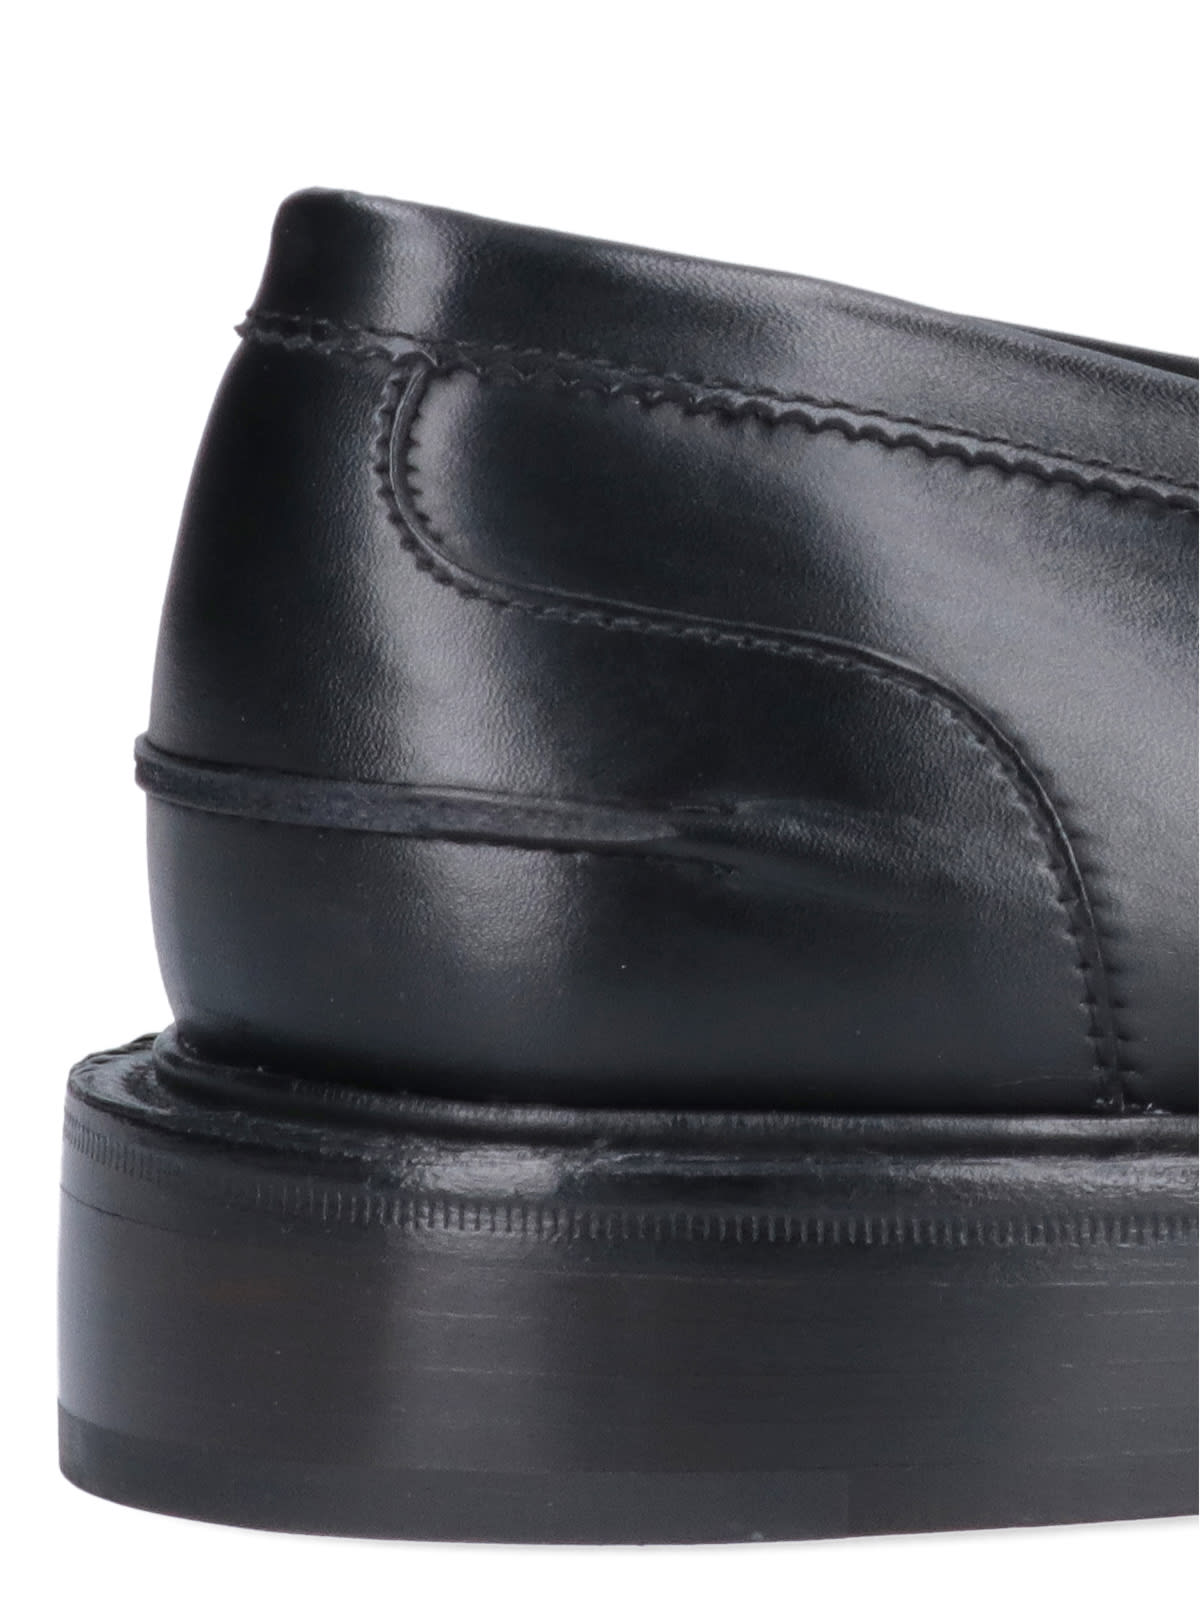 Shop Tricker's Loafers In Black